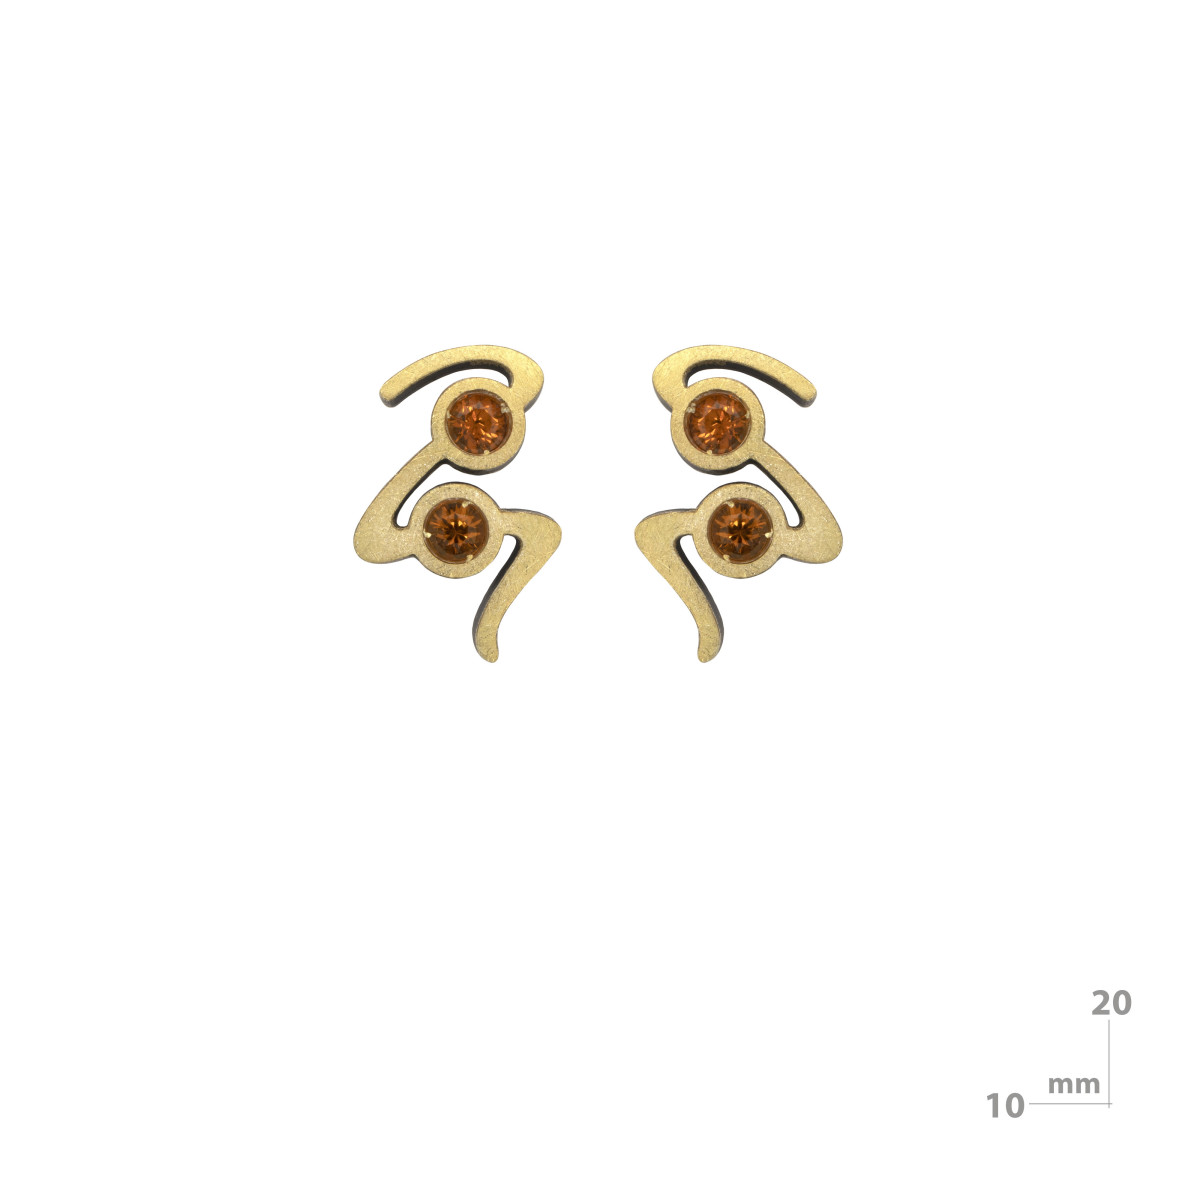 Silver, gold and mandarin garnet earrings